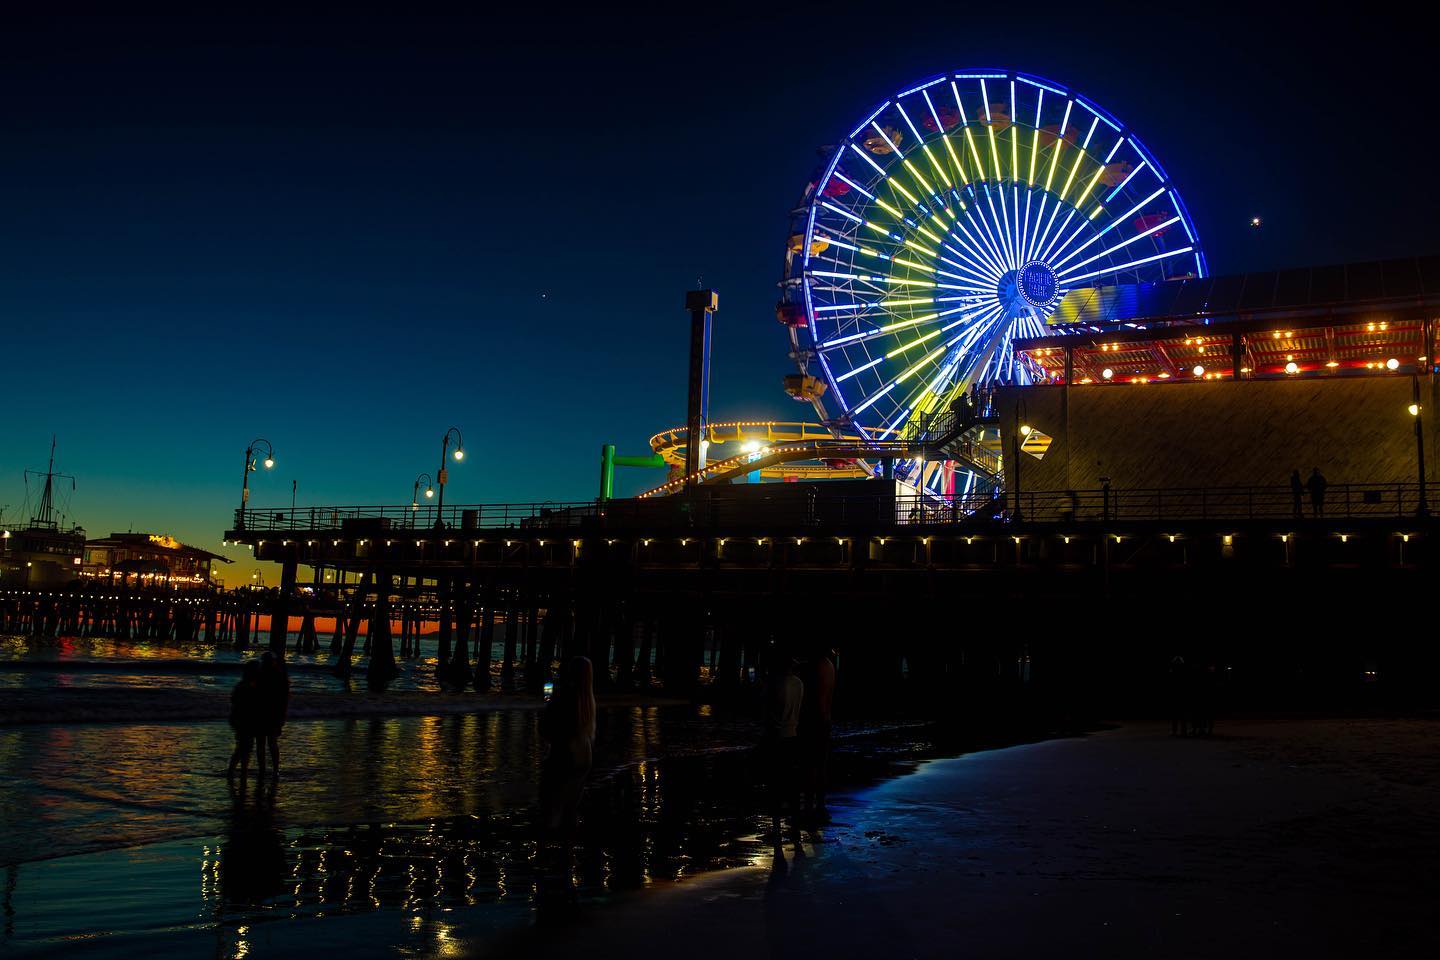 LA Rams Lights on the Pacific Wheel Ferris Wheel on the Santa Monica Pier | Photo by @theeyeofla